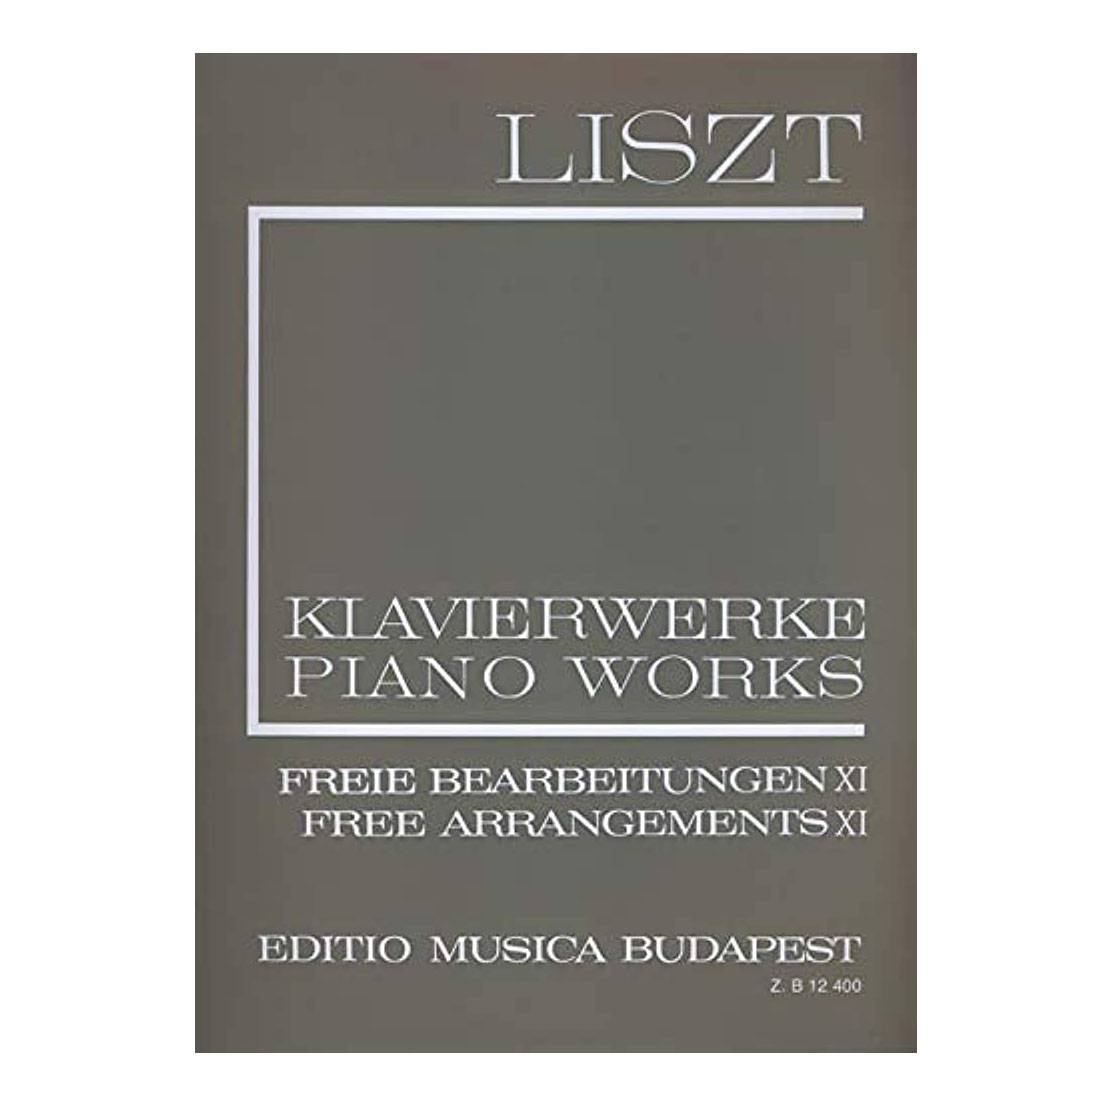 Liszt - Piano Works Free Arrangements XI II/11